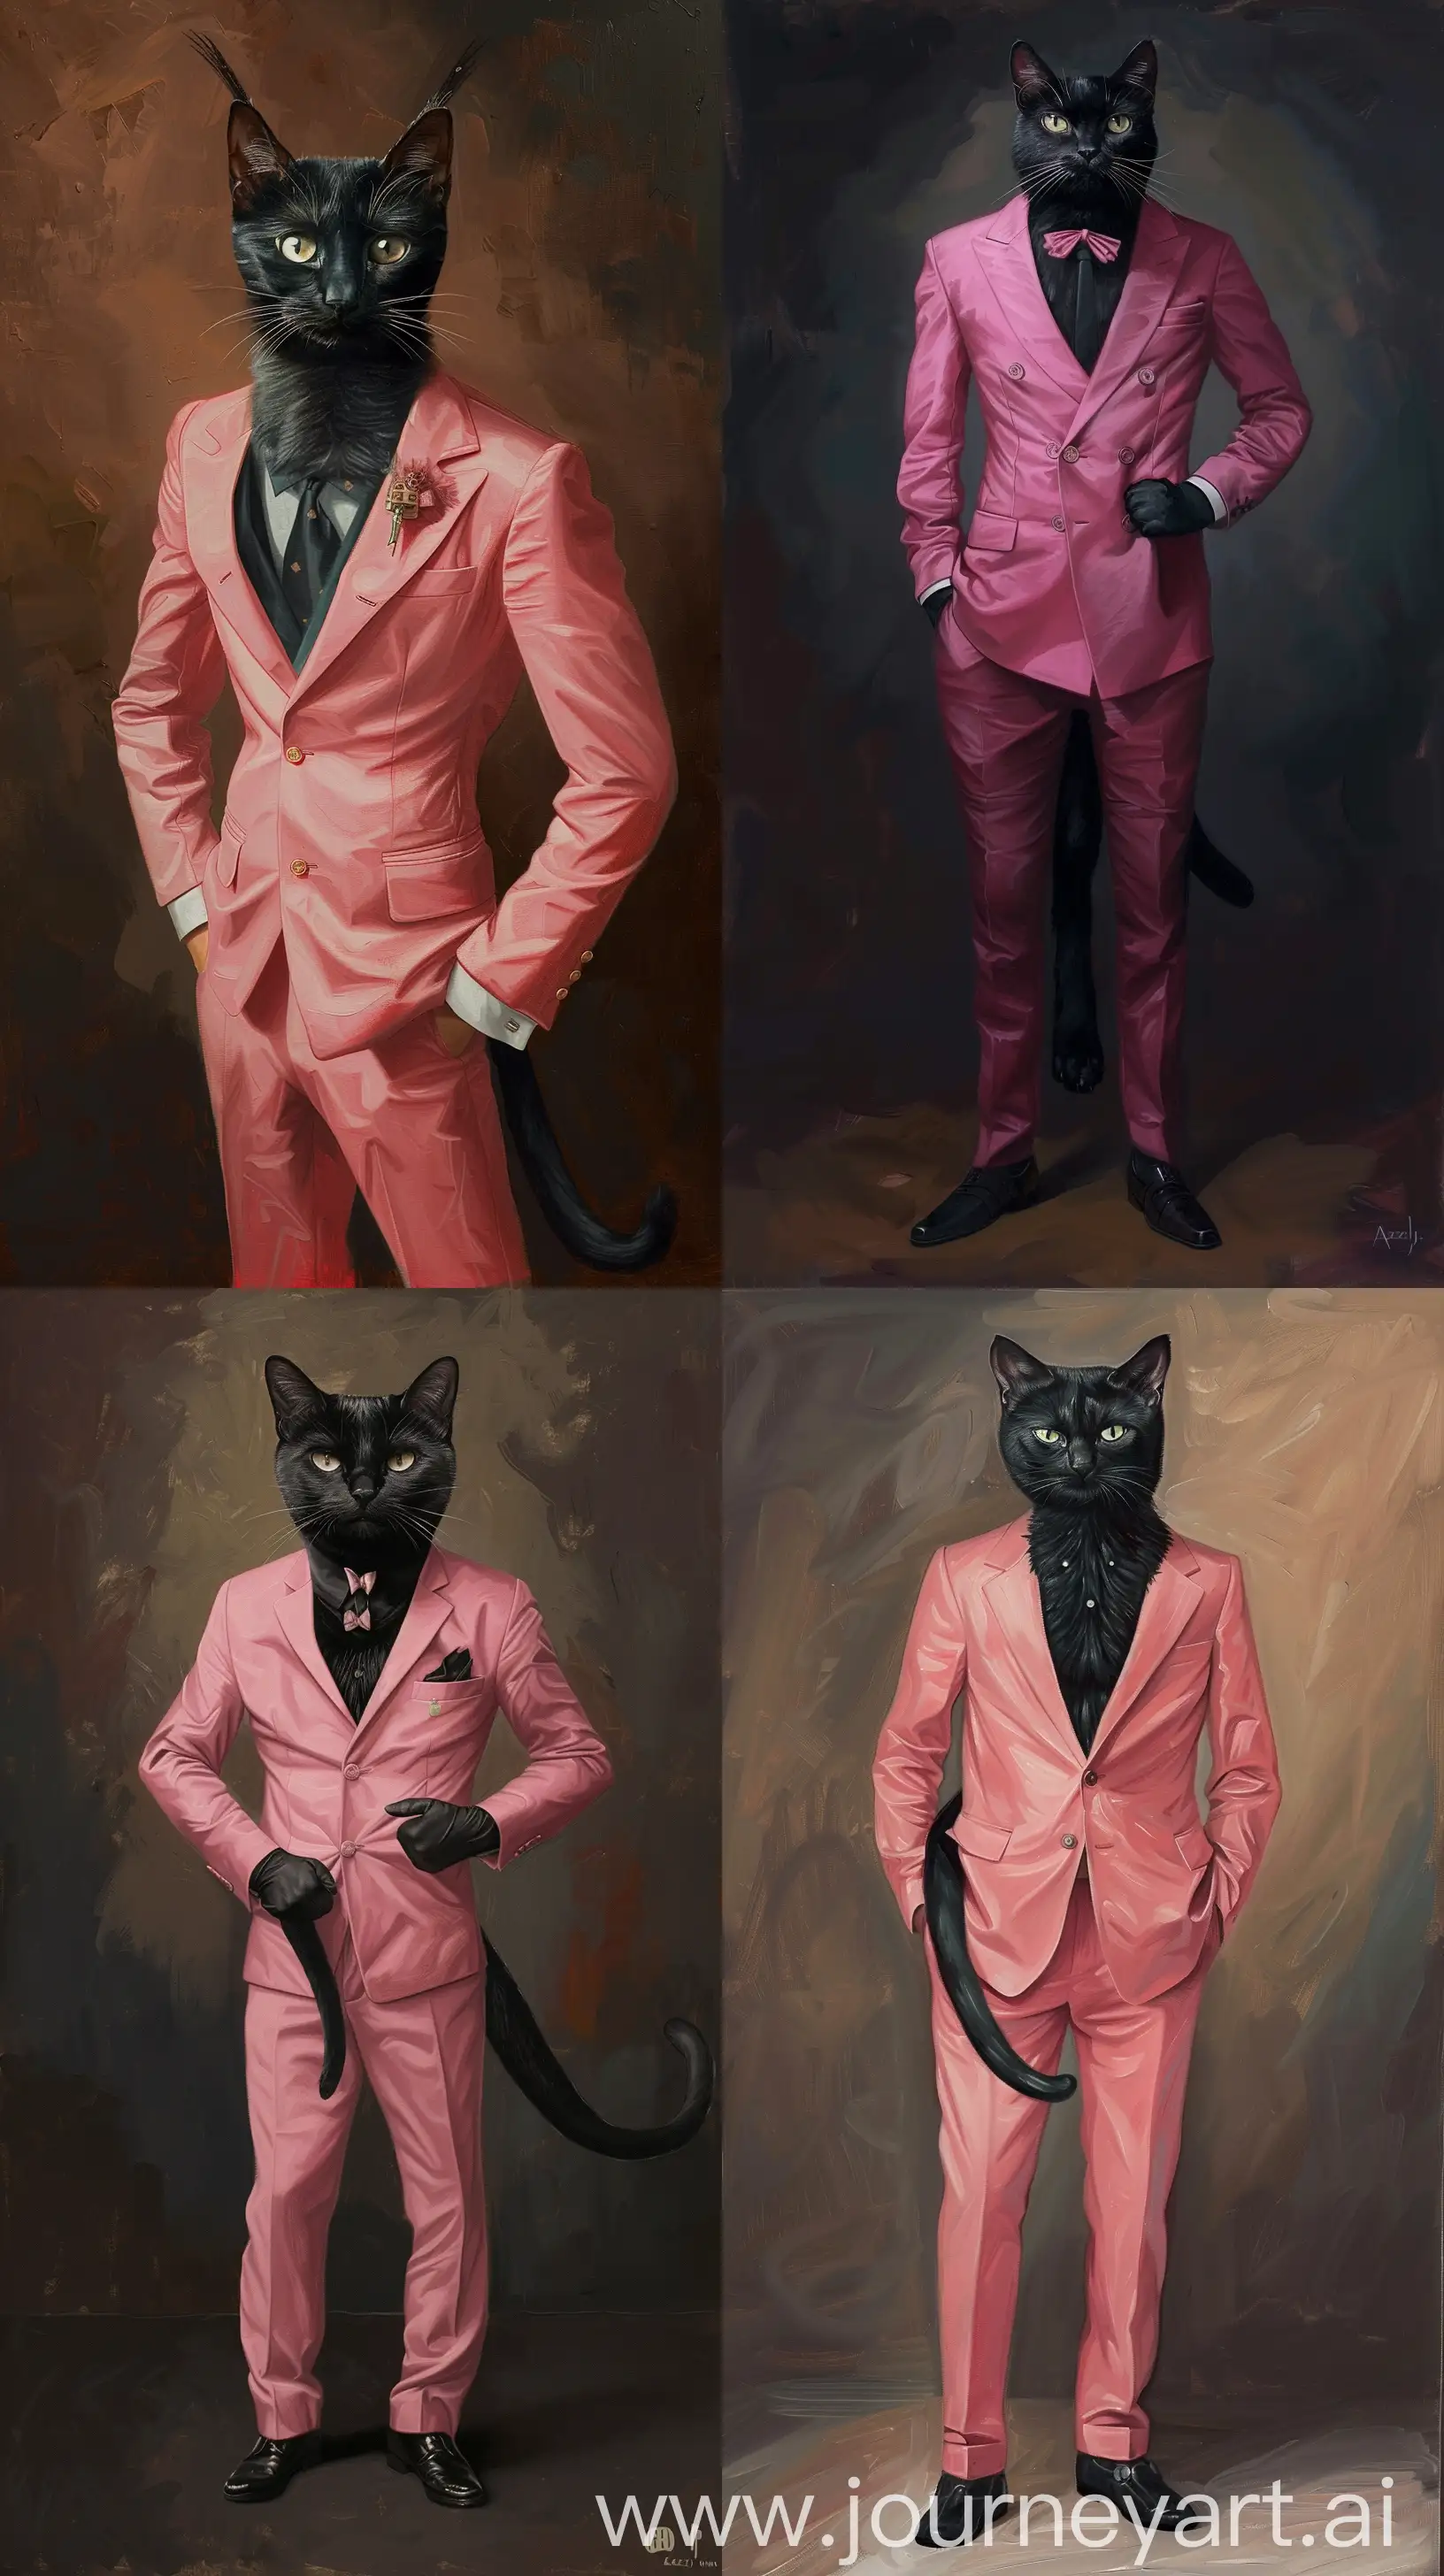 Maximalist-Art-Black-Cat-in-Pink-Suit-Phone-Wallpaper